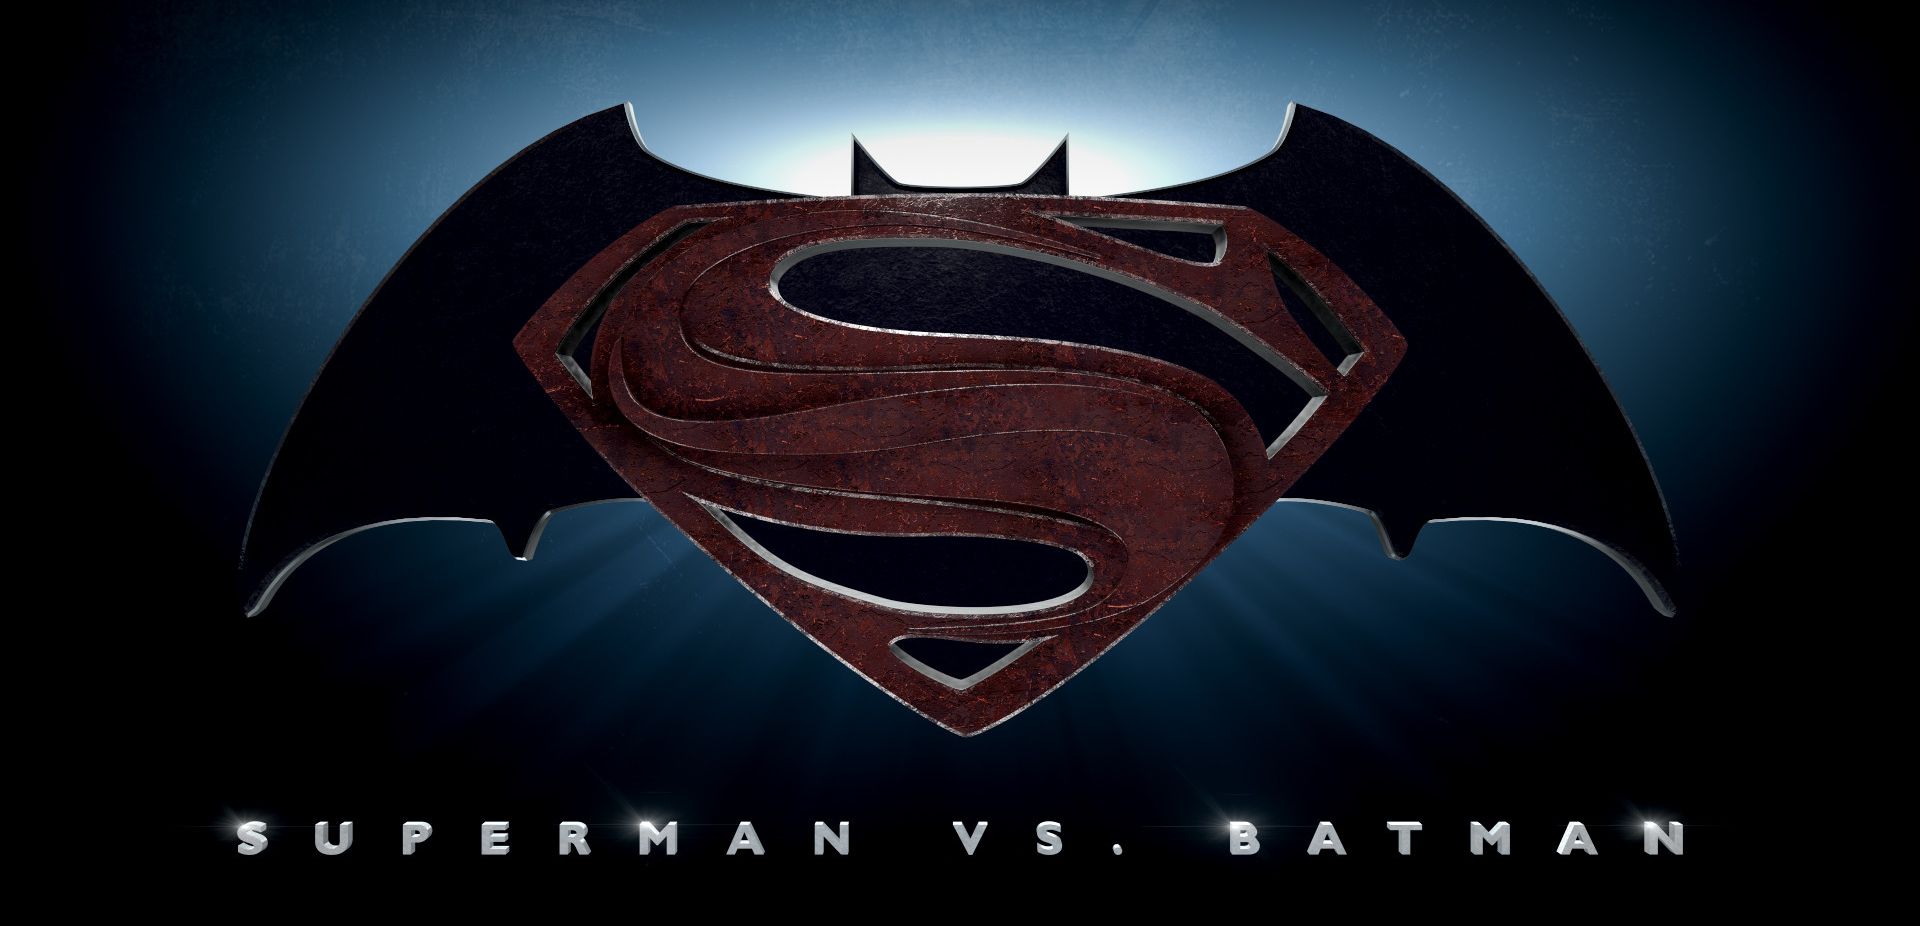 Warner Bros. push Superman vs. Batman back to 2016